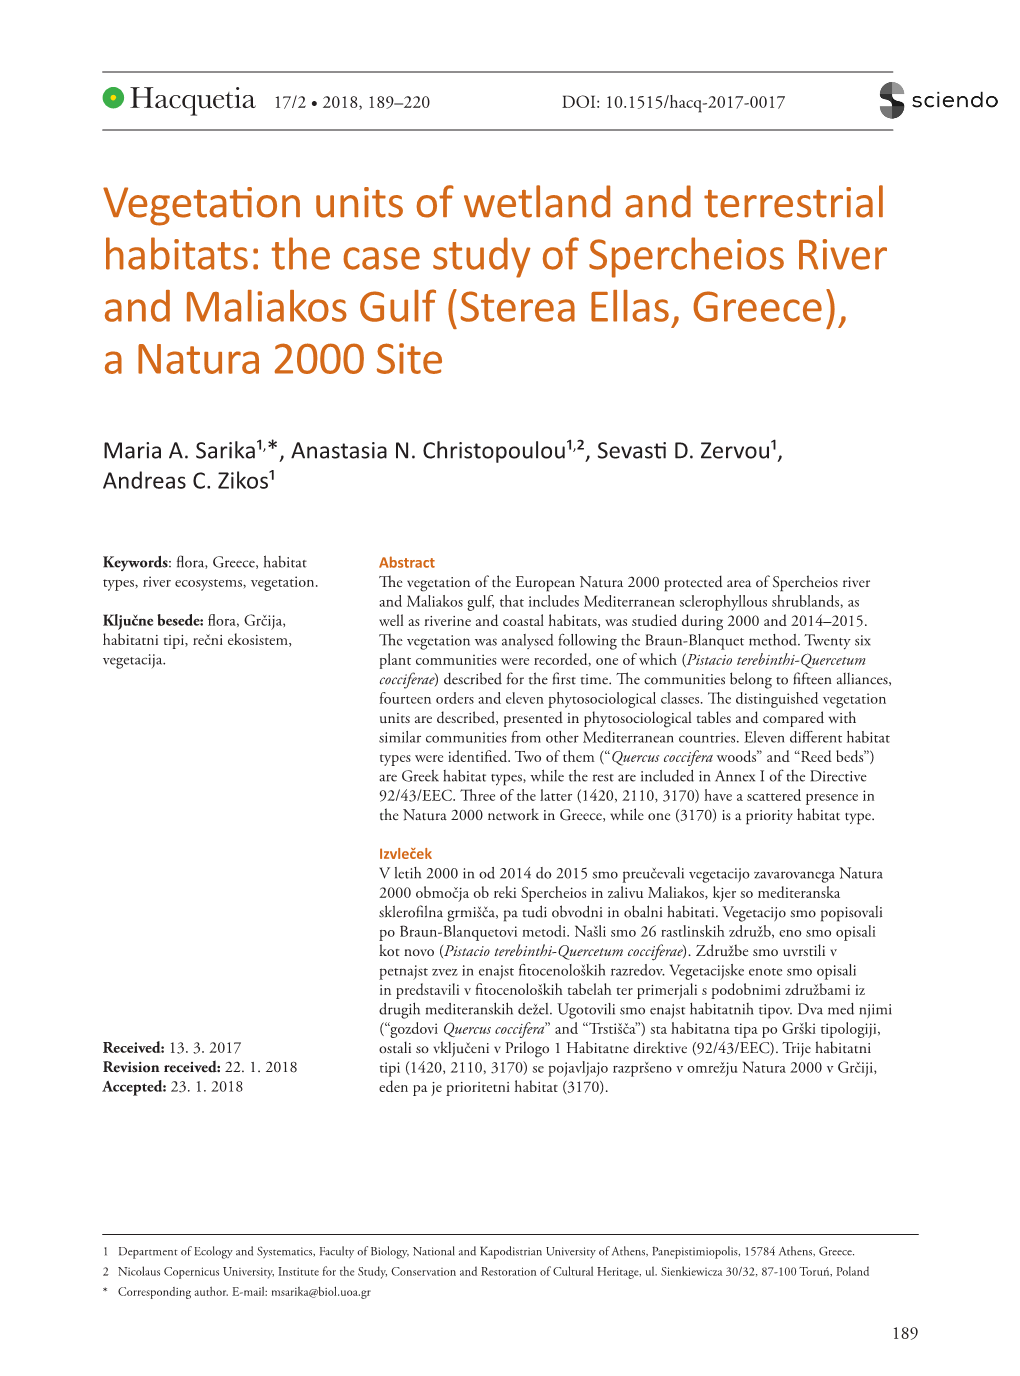 Vegetation Units of Wetland and Terrestrial Habitats: the Case Study of Spercheios River and Maliakos Gulf (Sterea Ellas, Greece), a Natura 2000 Site